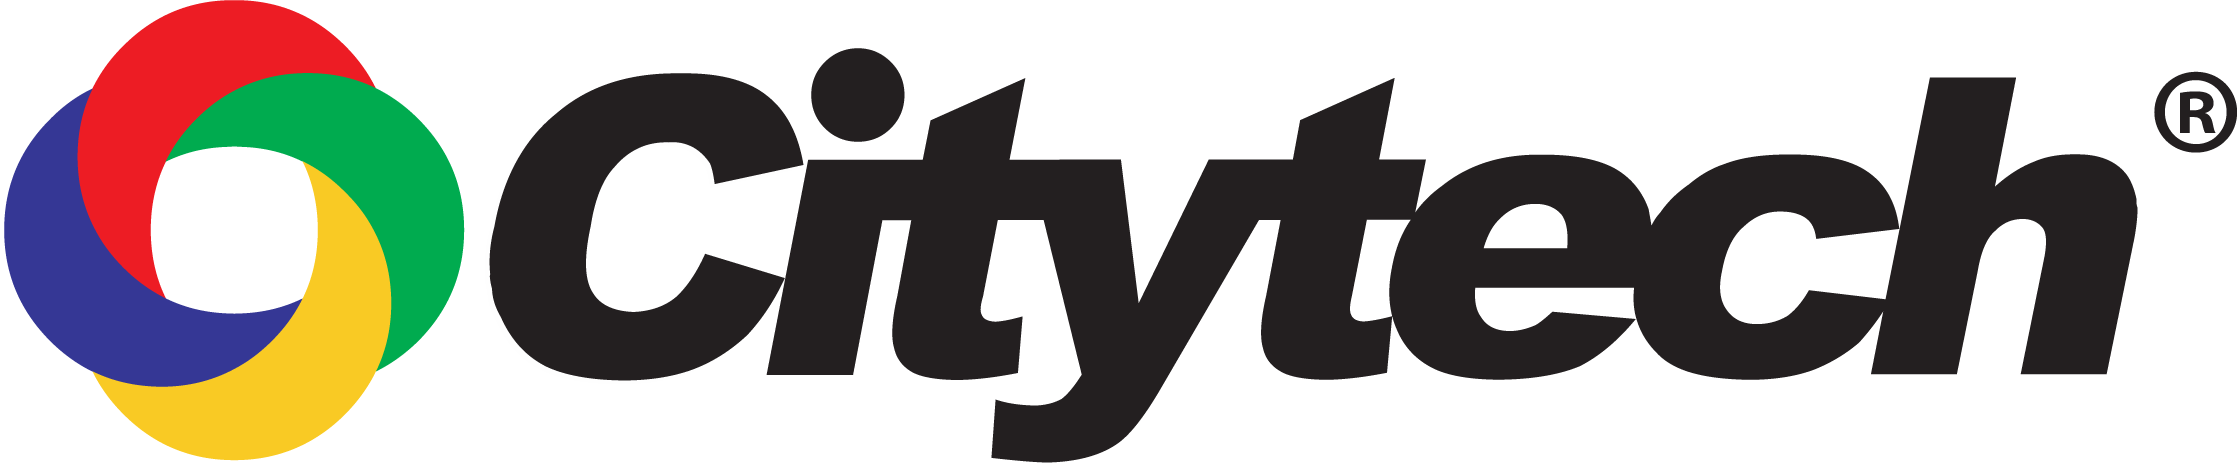 Citytech Logo